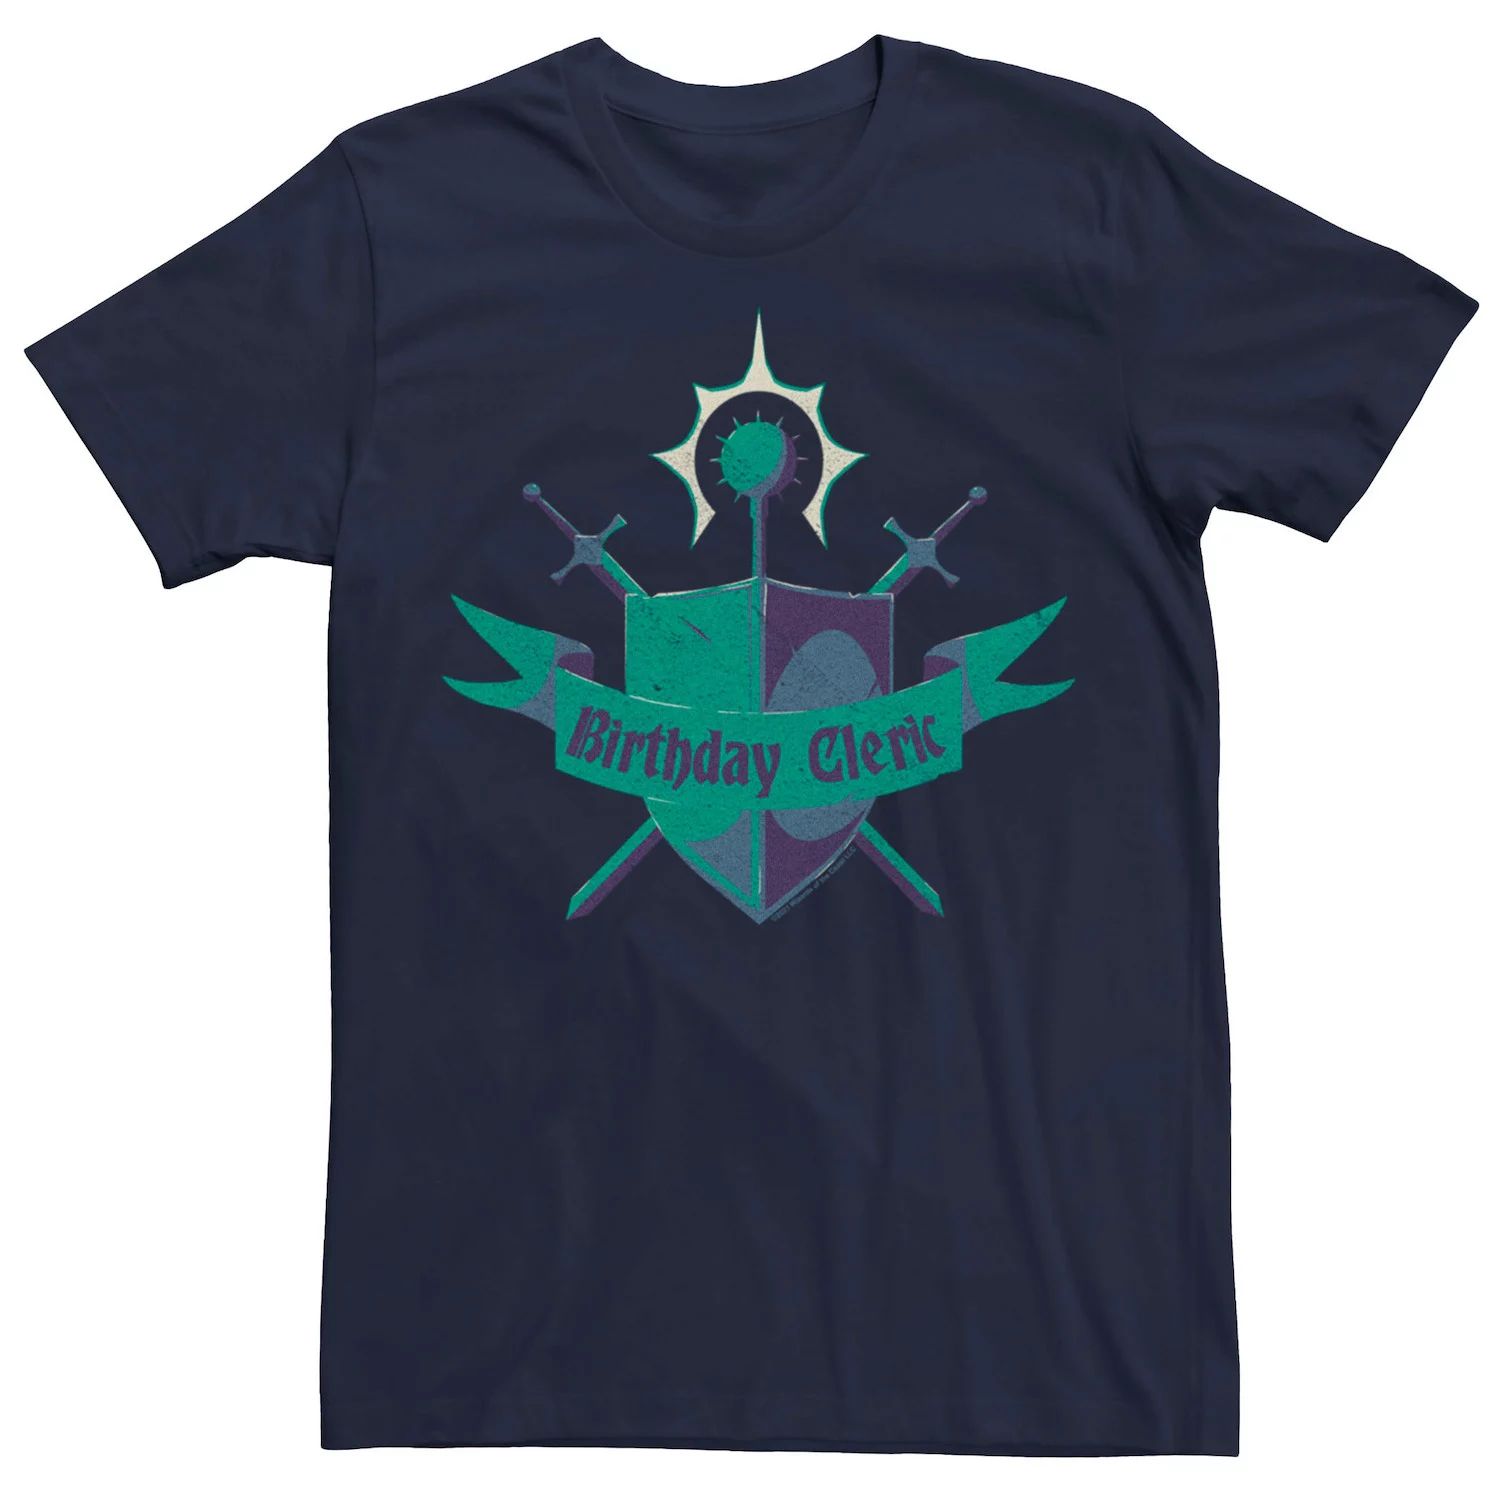 Мужская футболка Wizards Of The Coast Dungeons & Dragons с гербом на день рождения Licensed Character